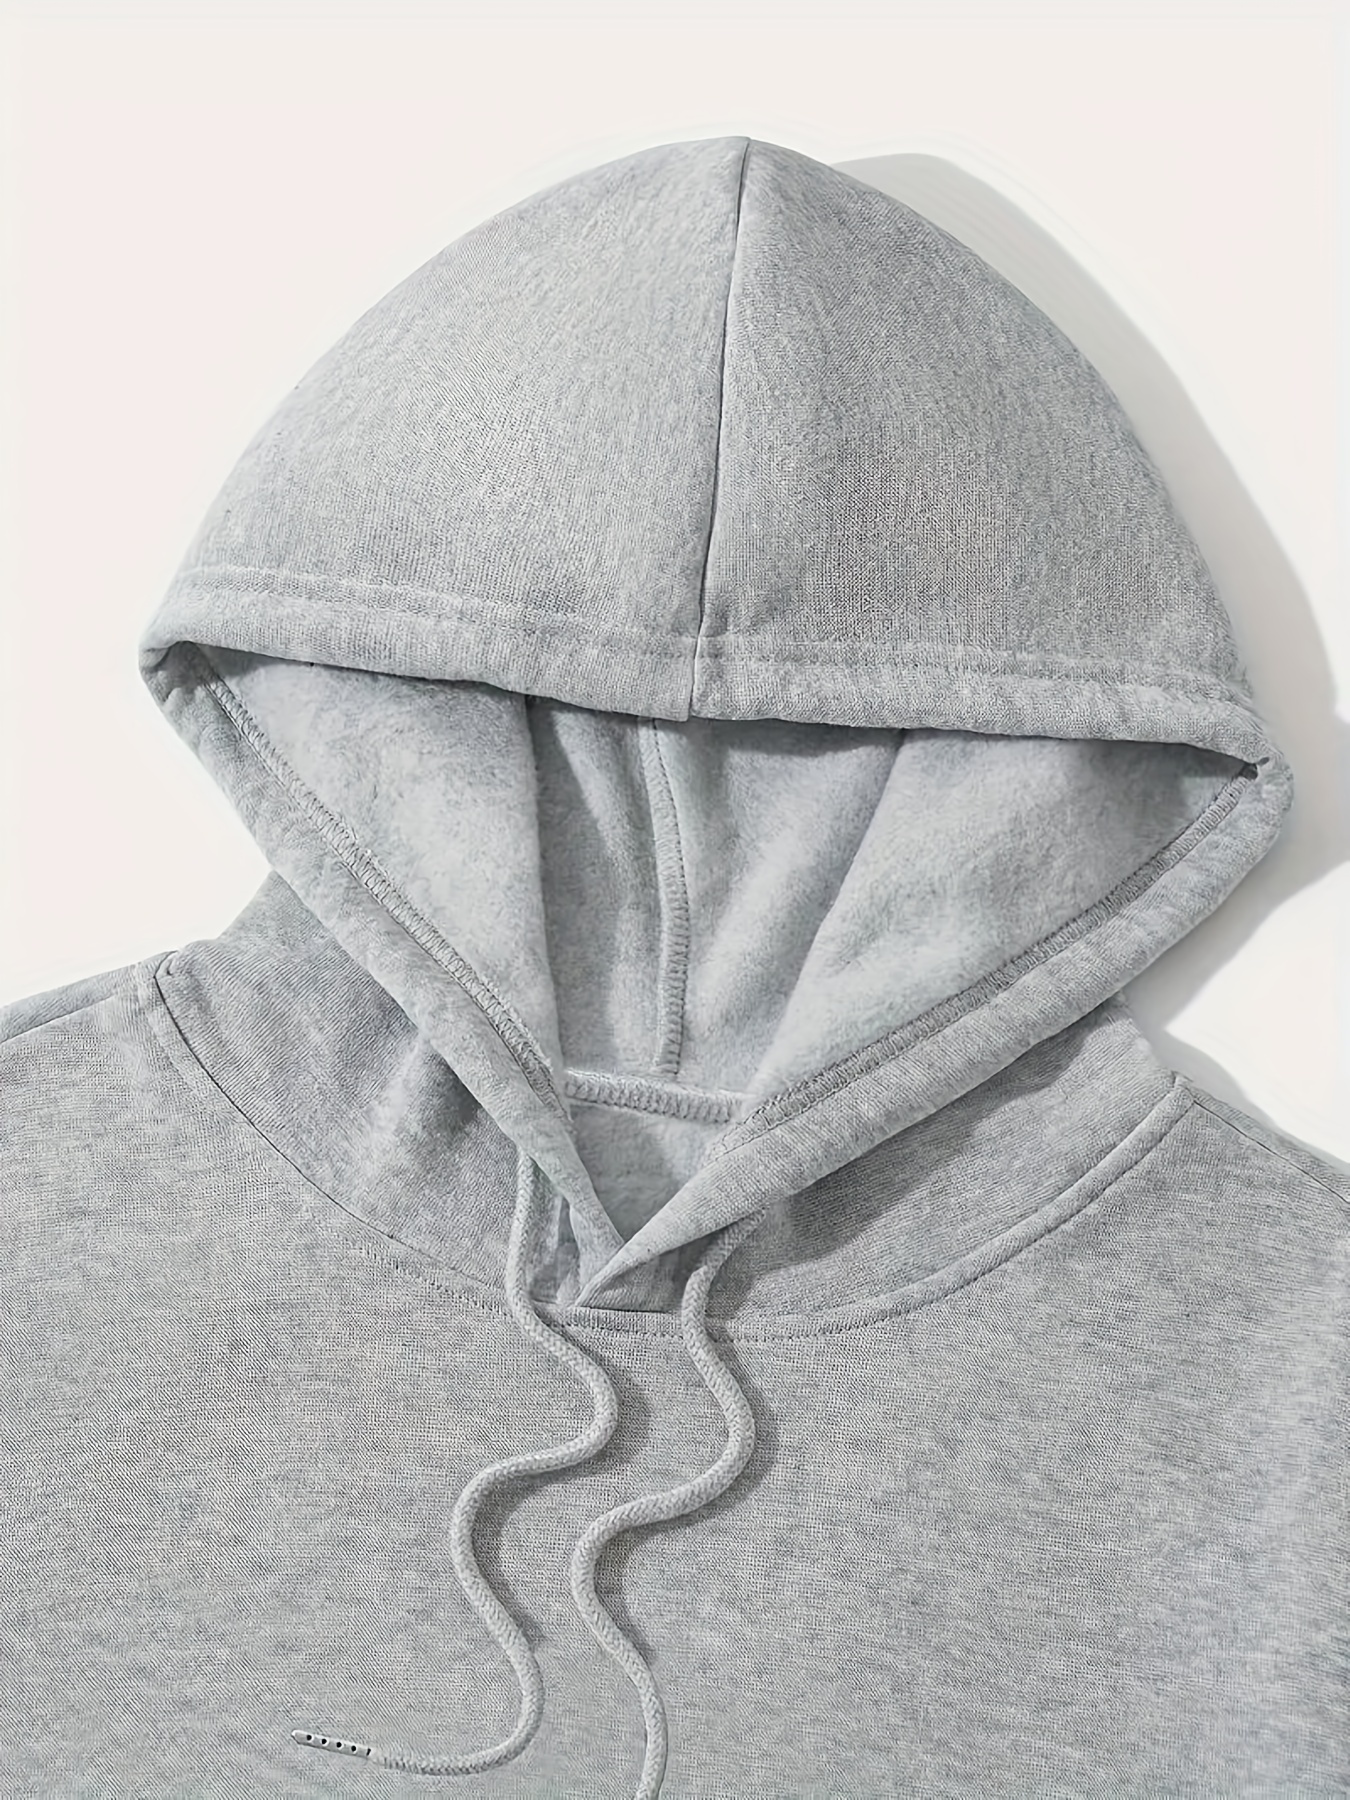 headphone smile print hoodie hoodies for men mens casual graphic design pullover hooded sweatshirt with kangaroo pocket streetwear for winter fall as gifts details 22